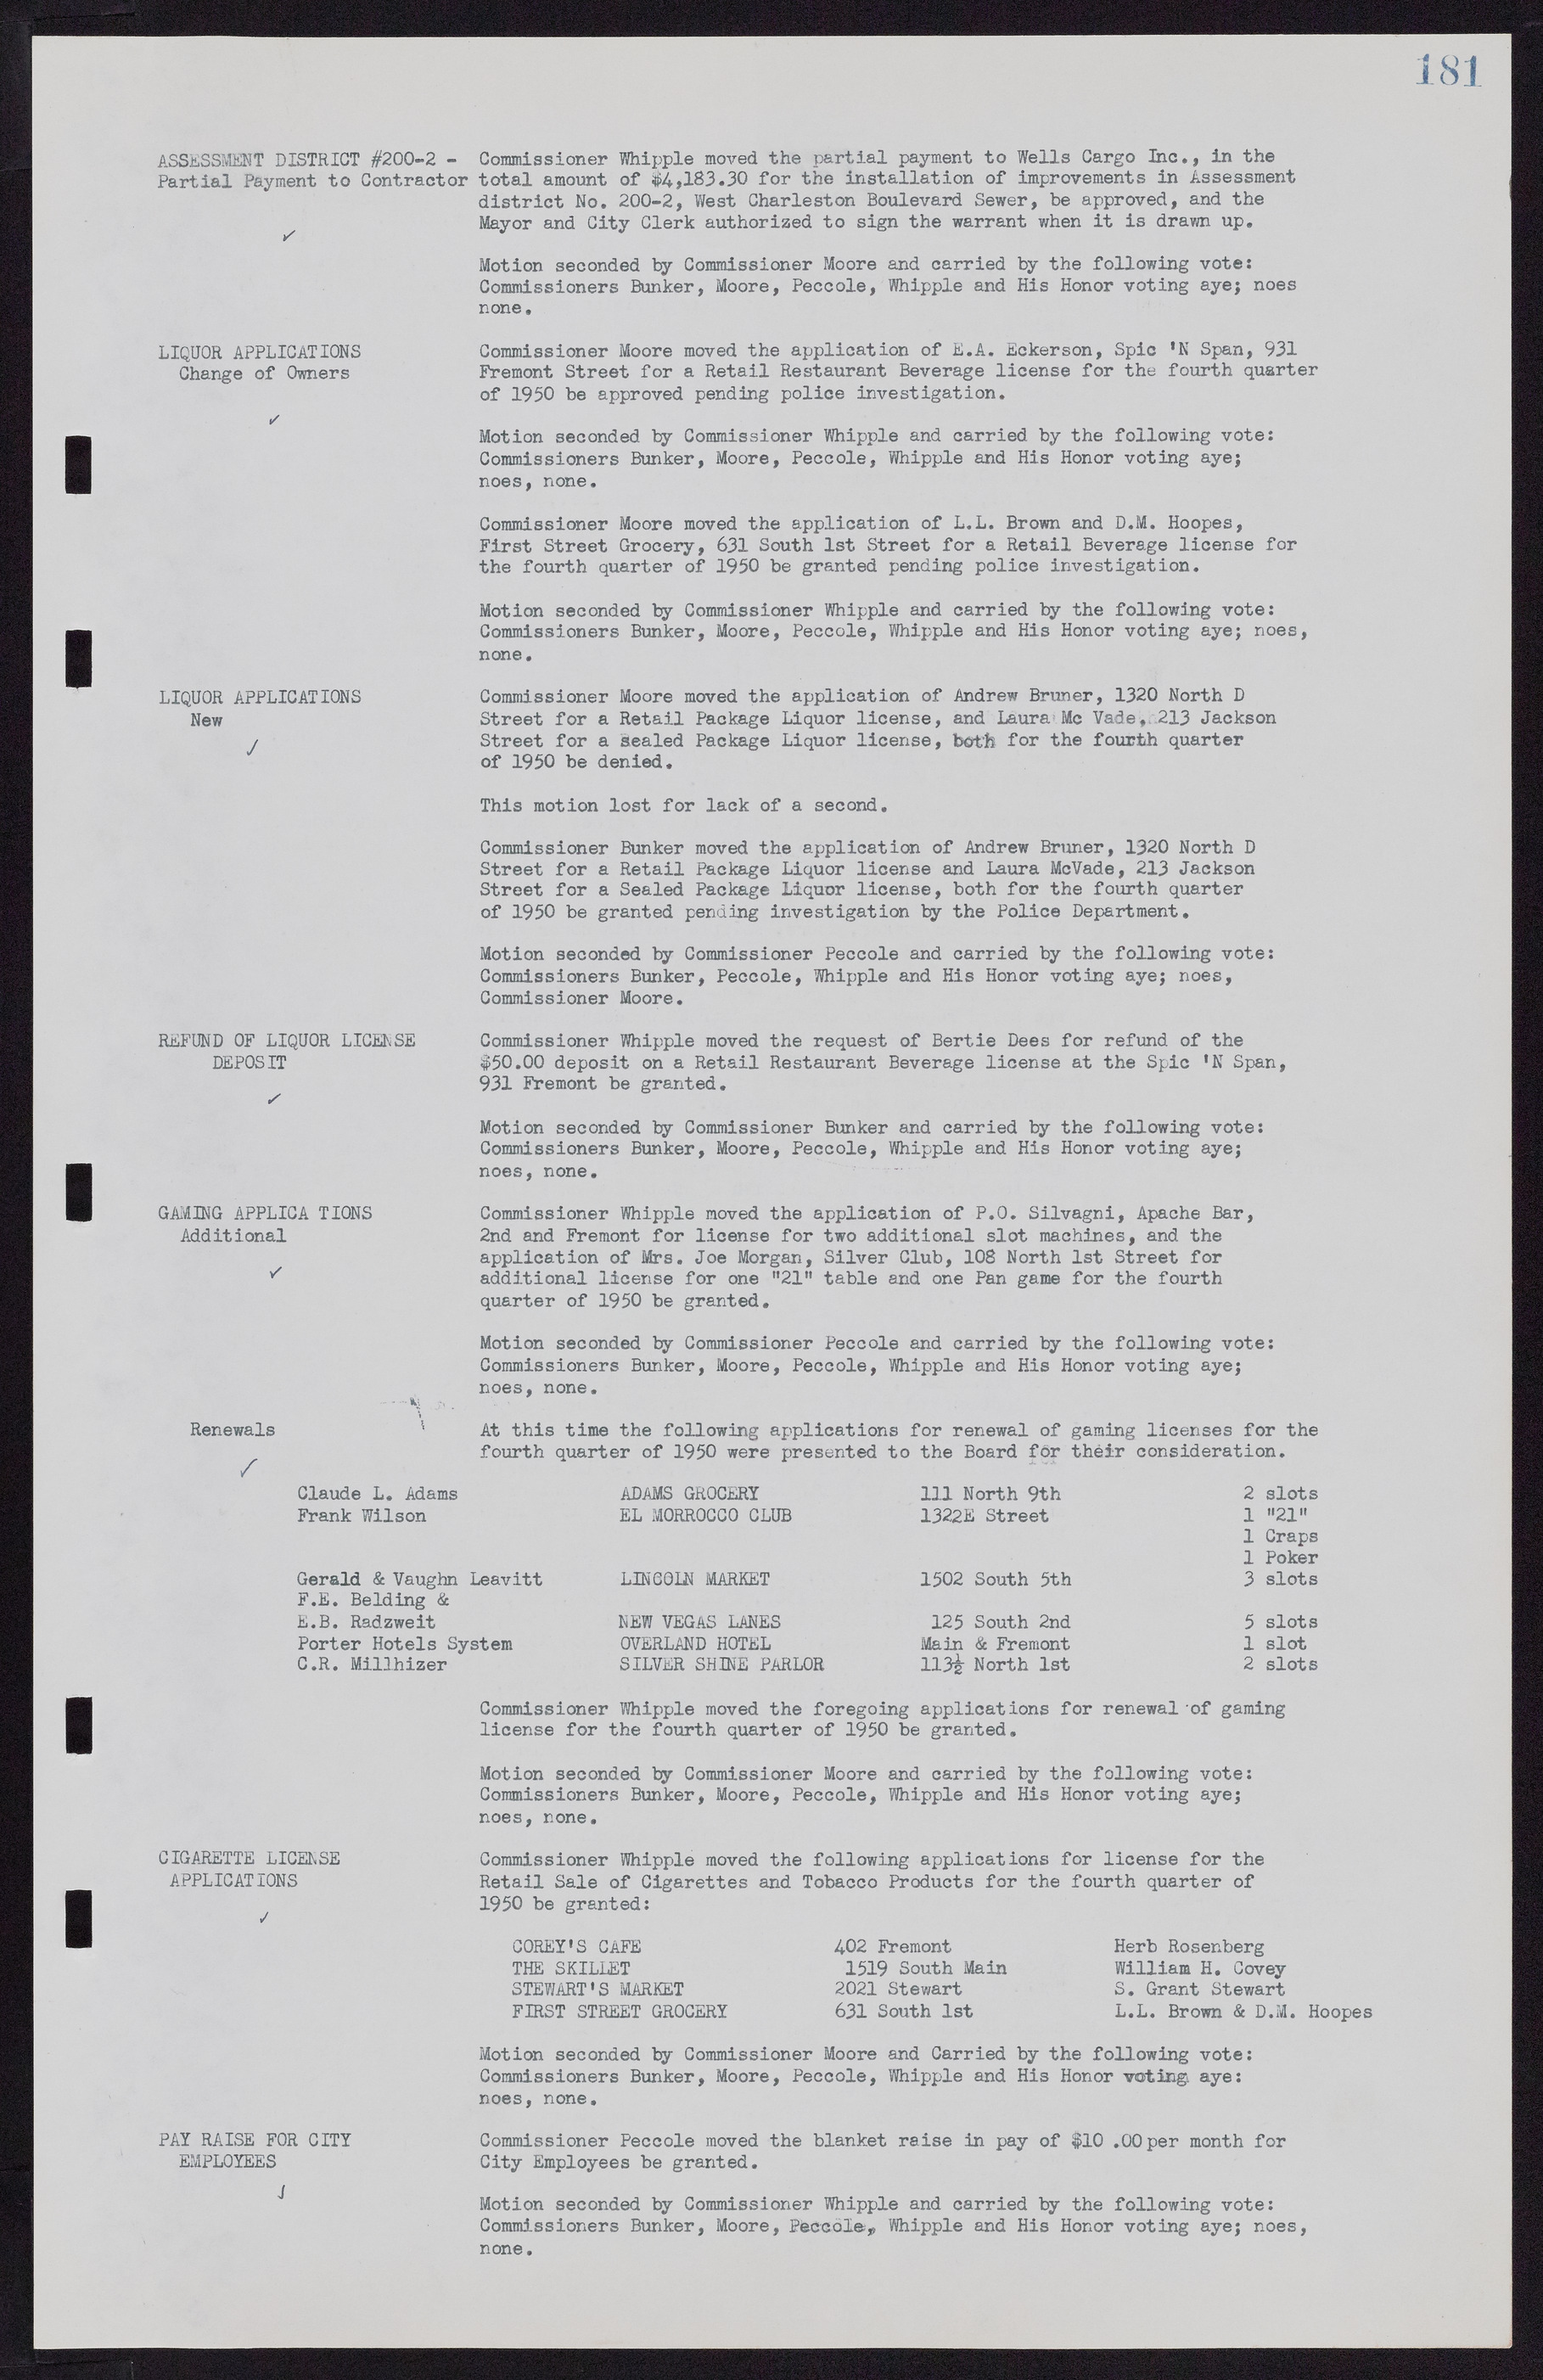 Las Vegas City Commission Minutes, November 7, 1949 to May 21, 1952, lvc000007-191